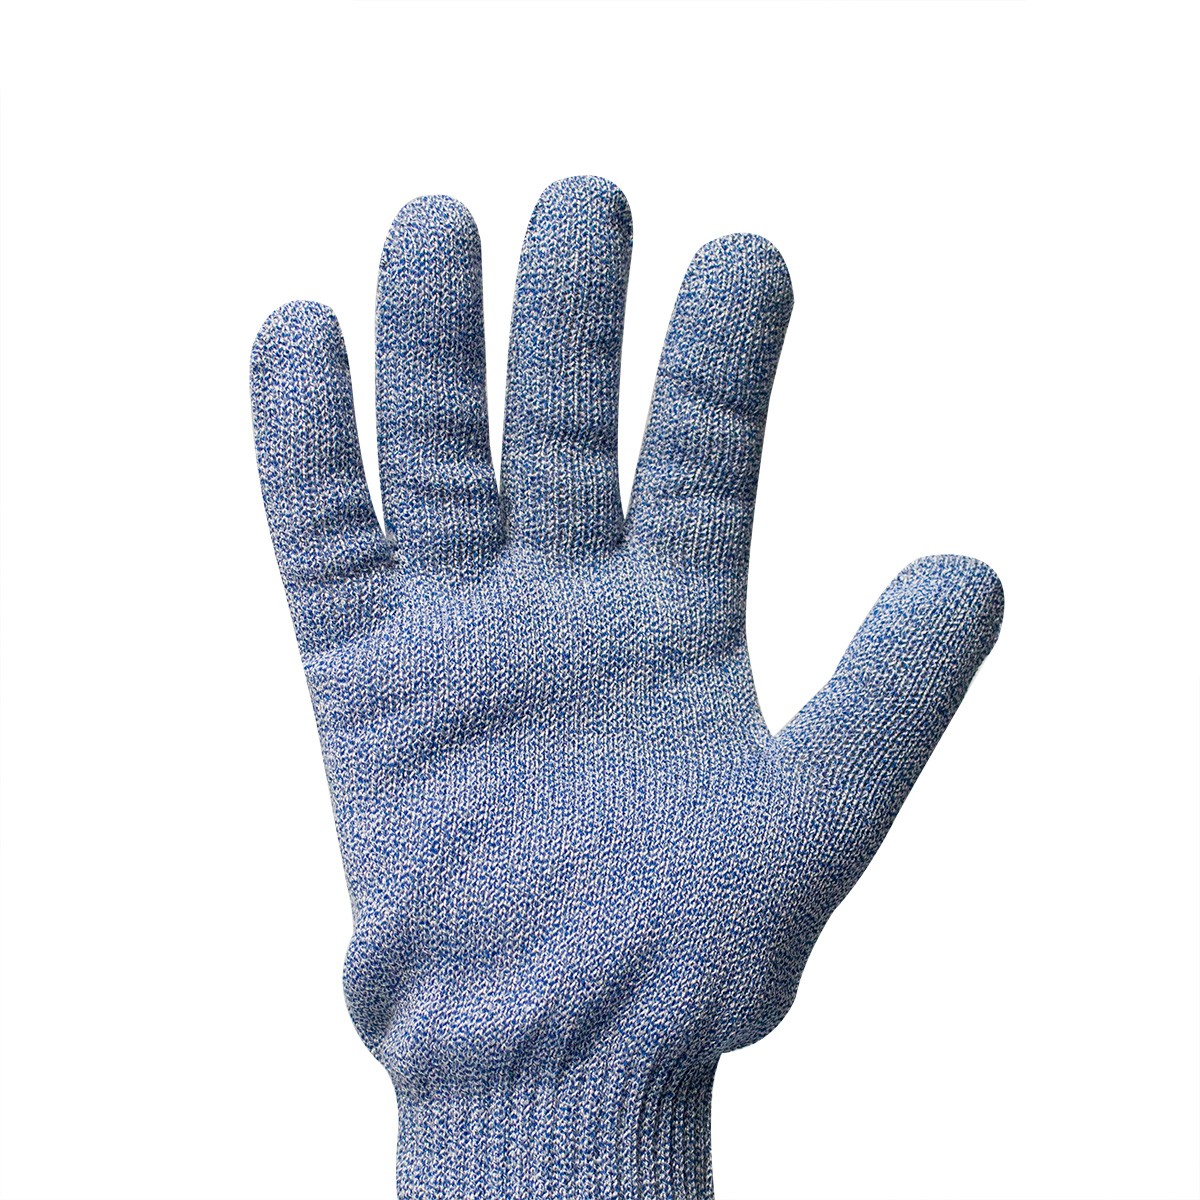 UltraSource Gloves - Premium Cut Resistant - ANSI Level A6 Cut